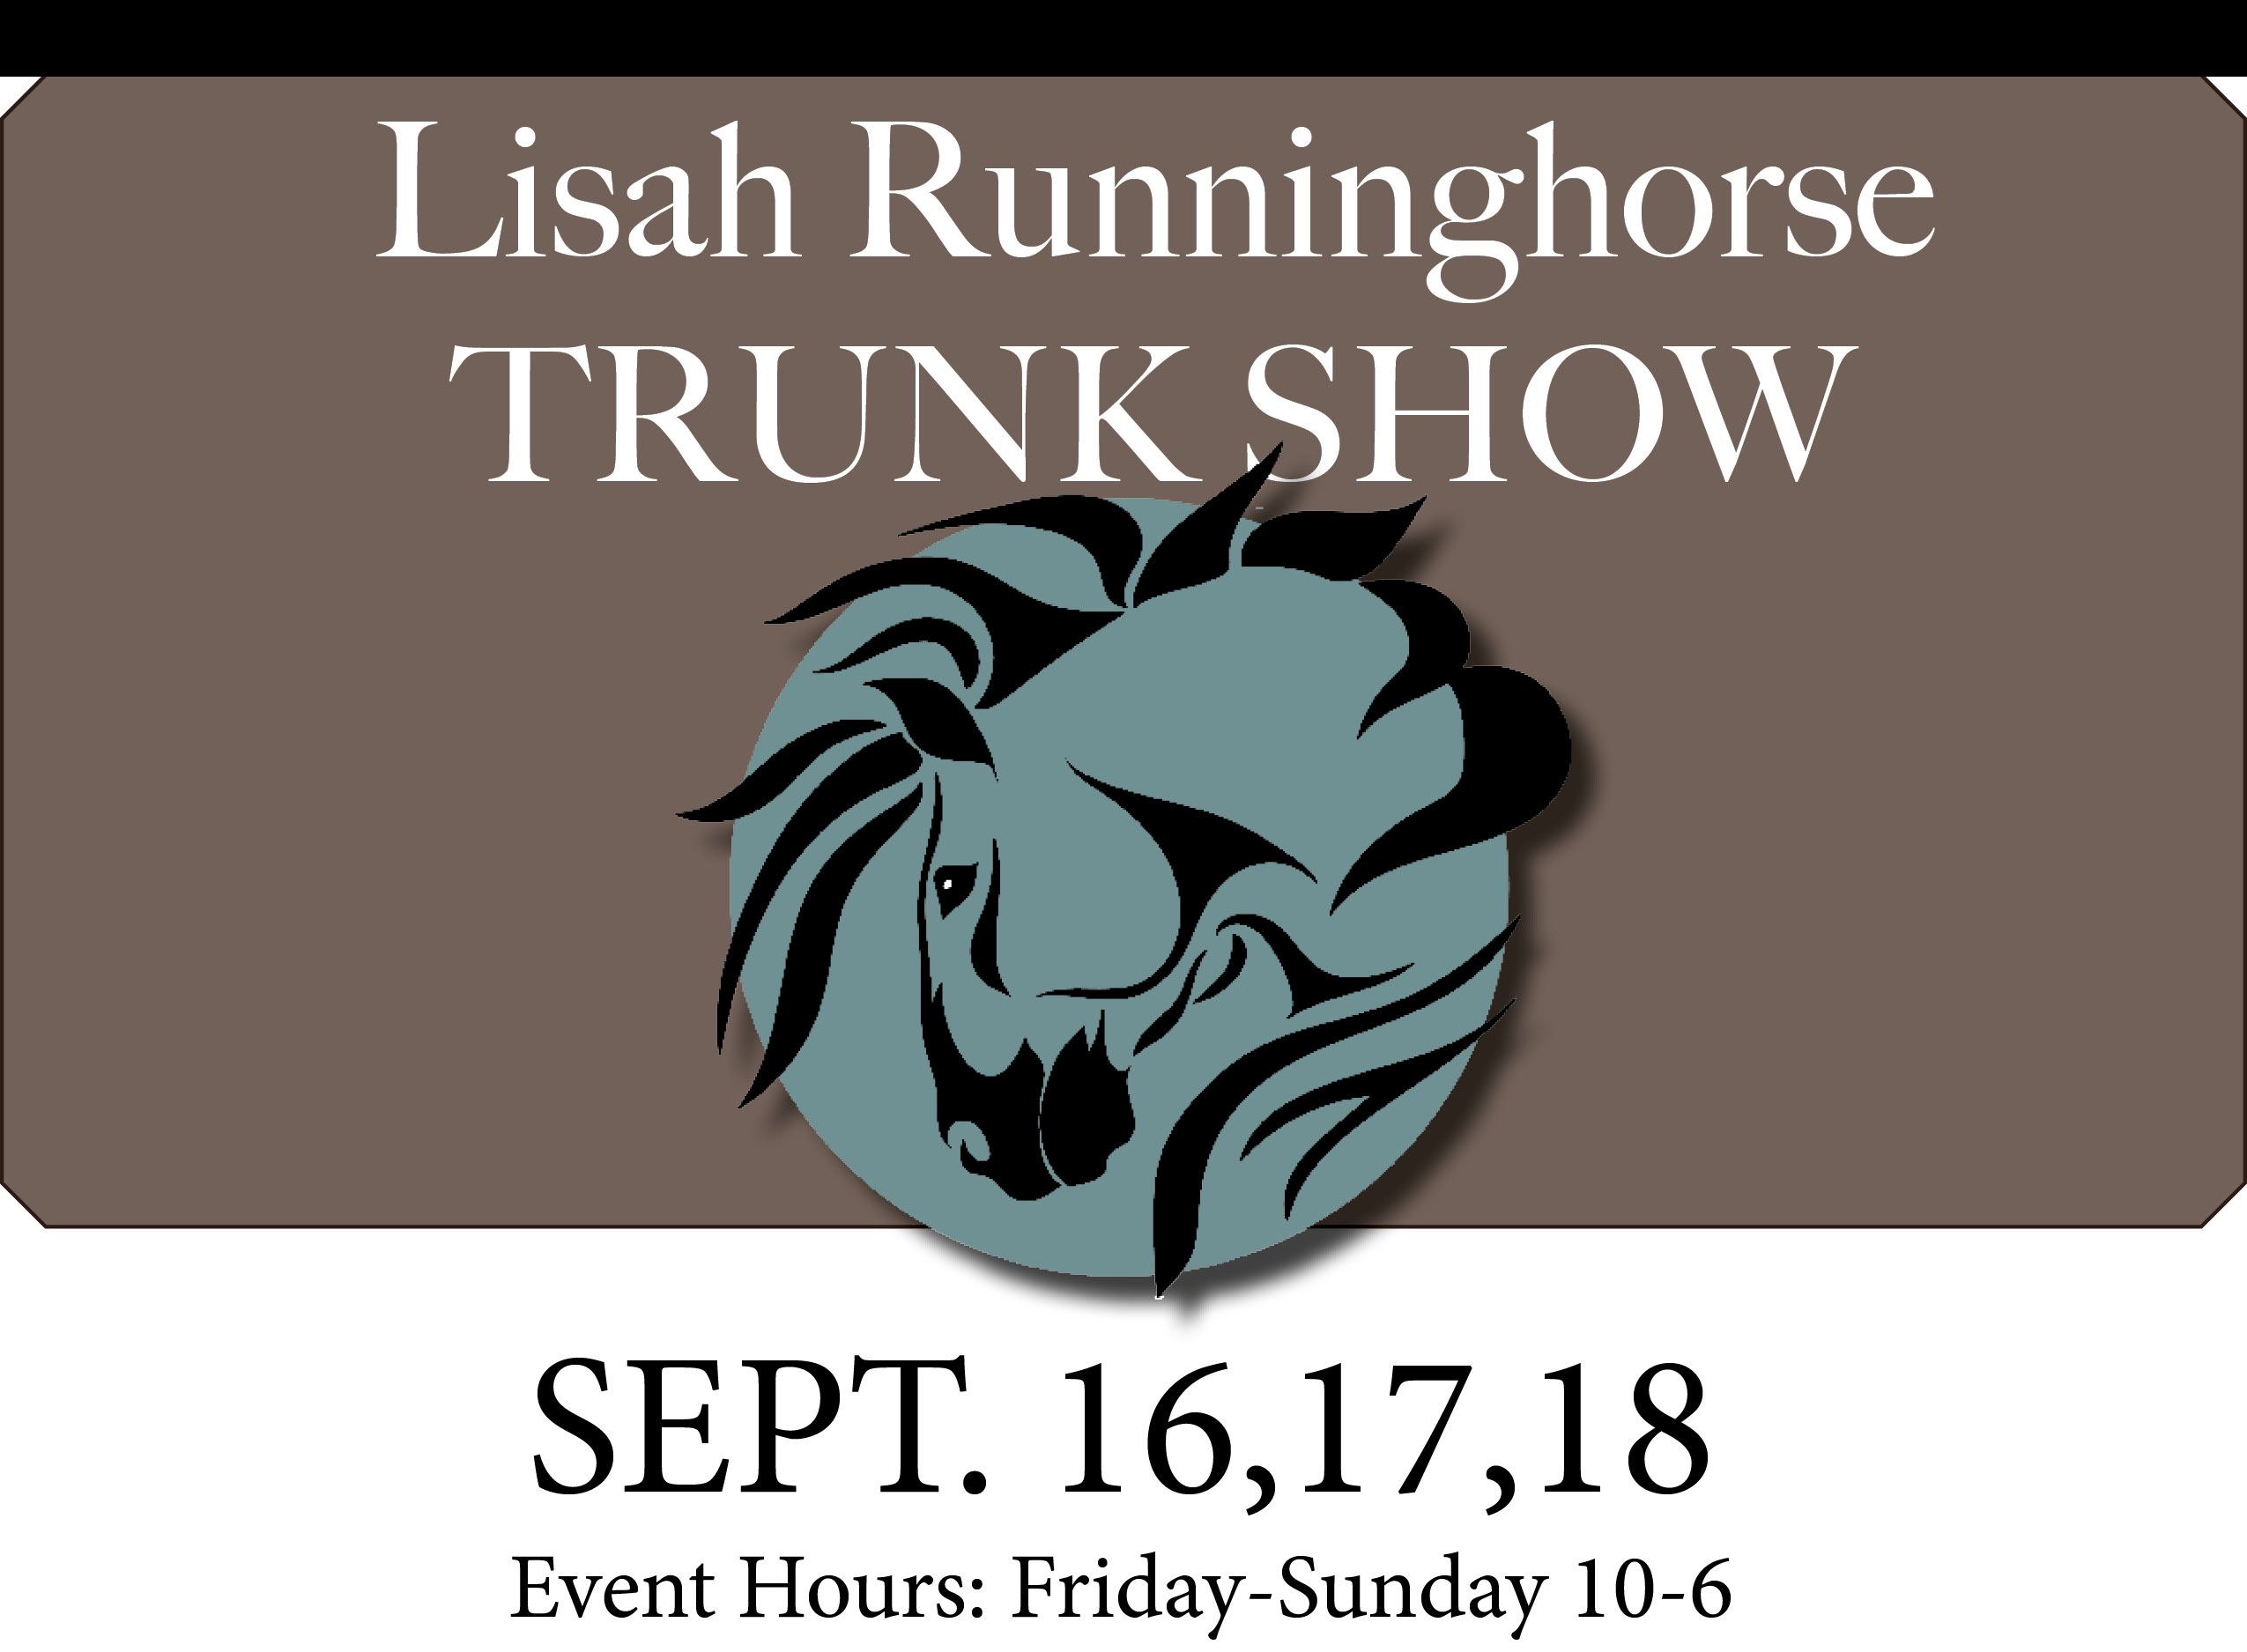 Lisah Runninghorse